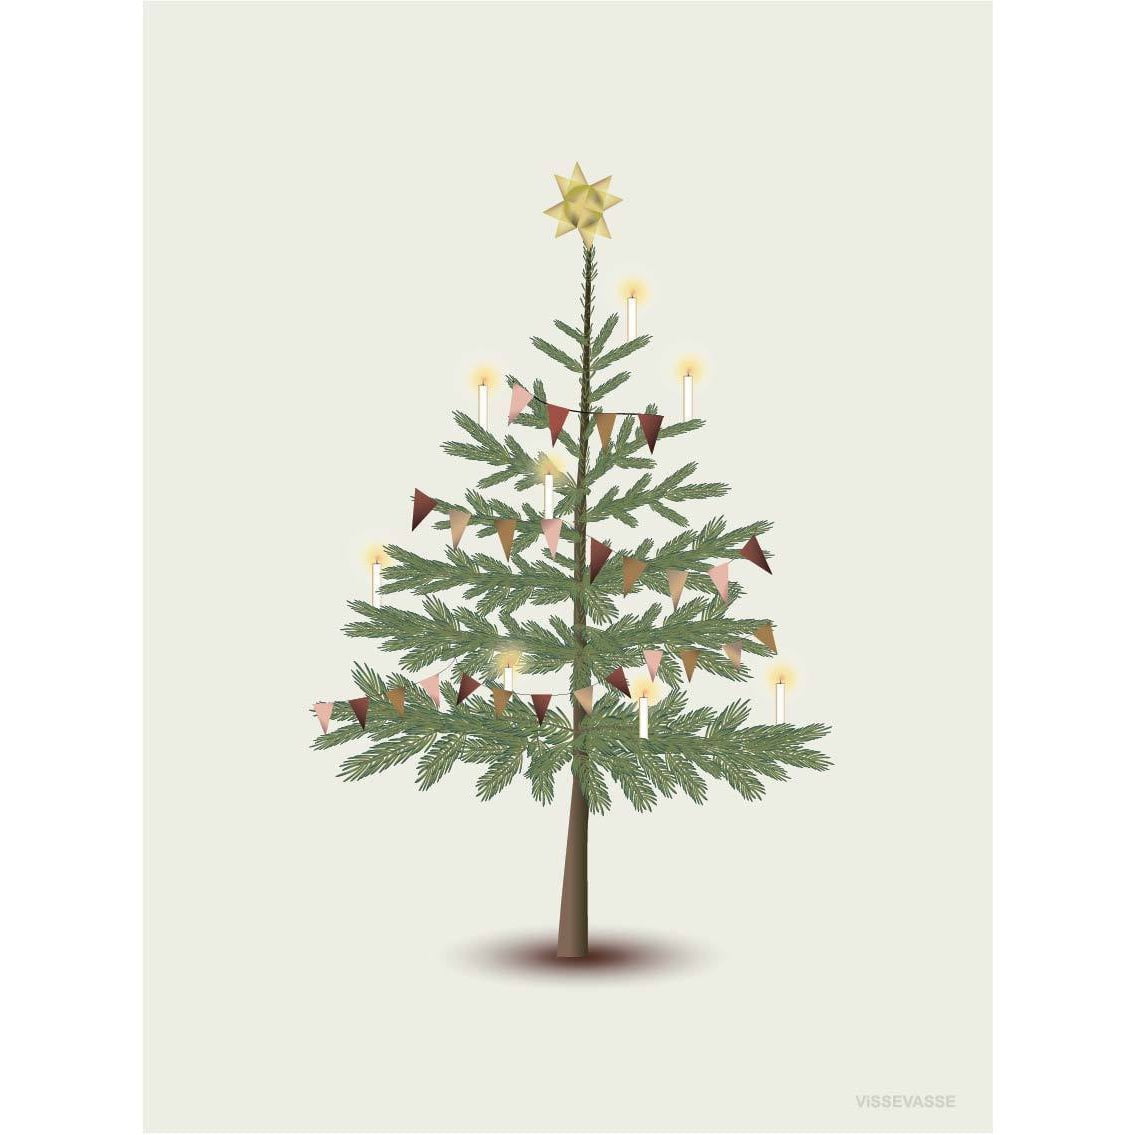 Vissevasse De kerstboomgroetkaart, 10,5x15 cm